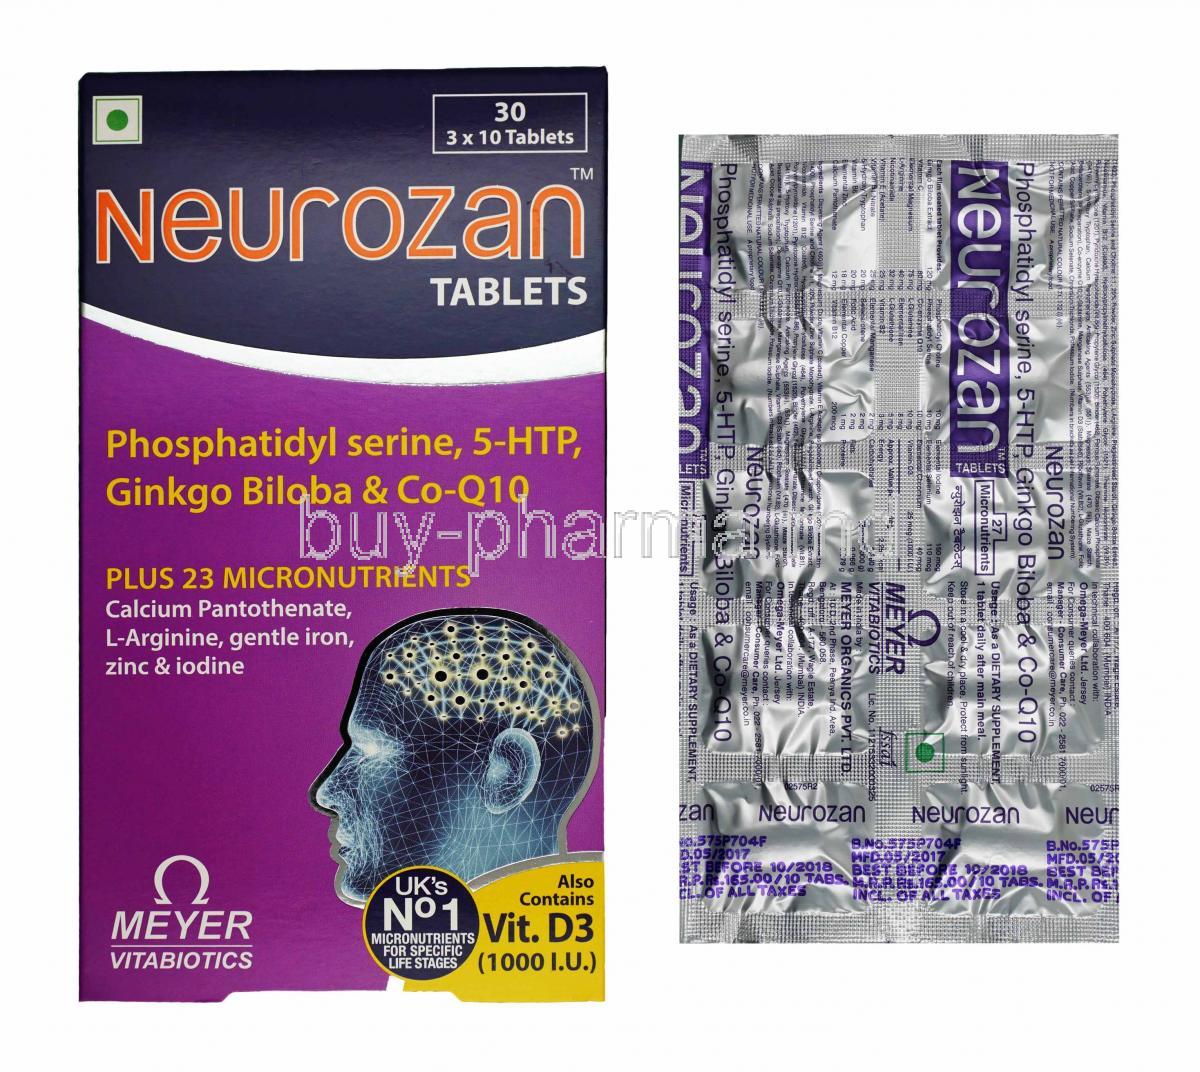 Neurozan box and tablets